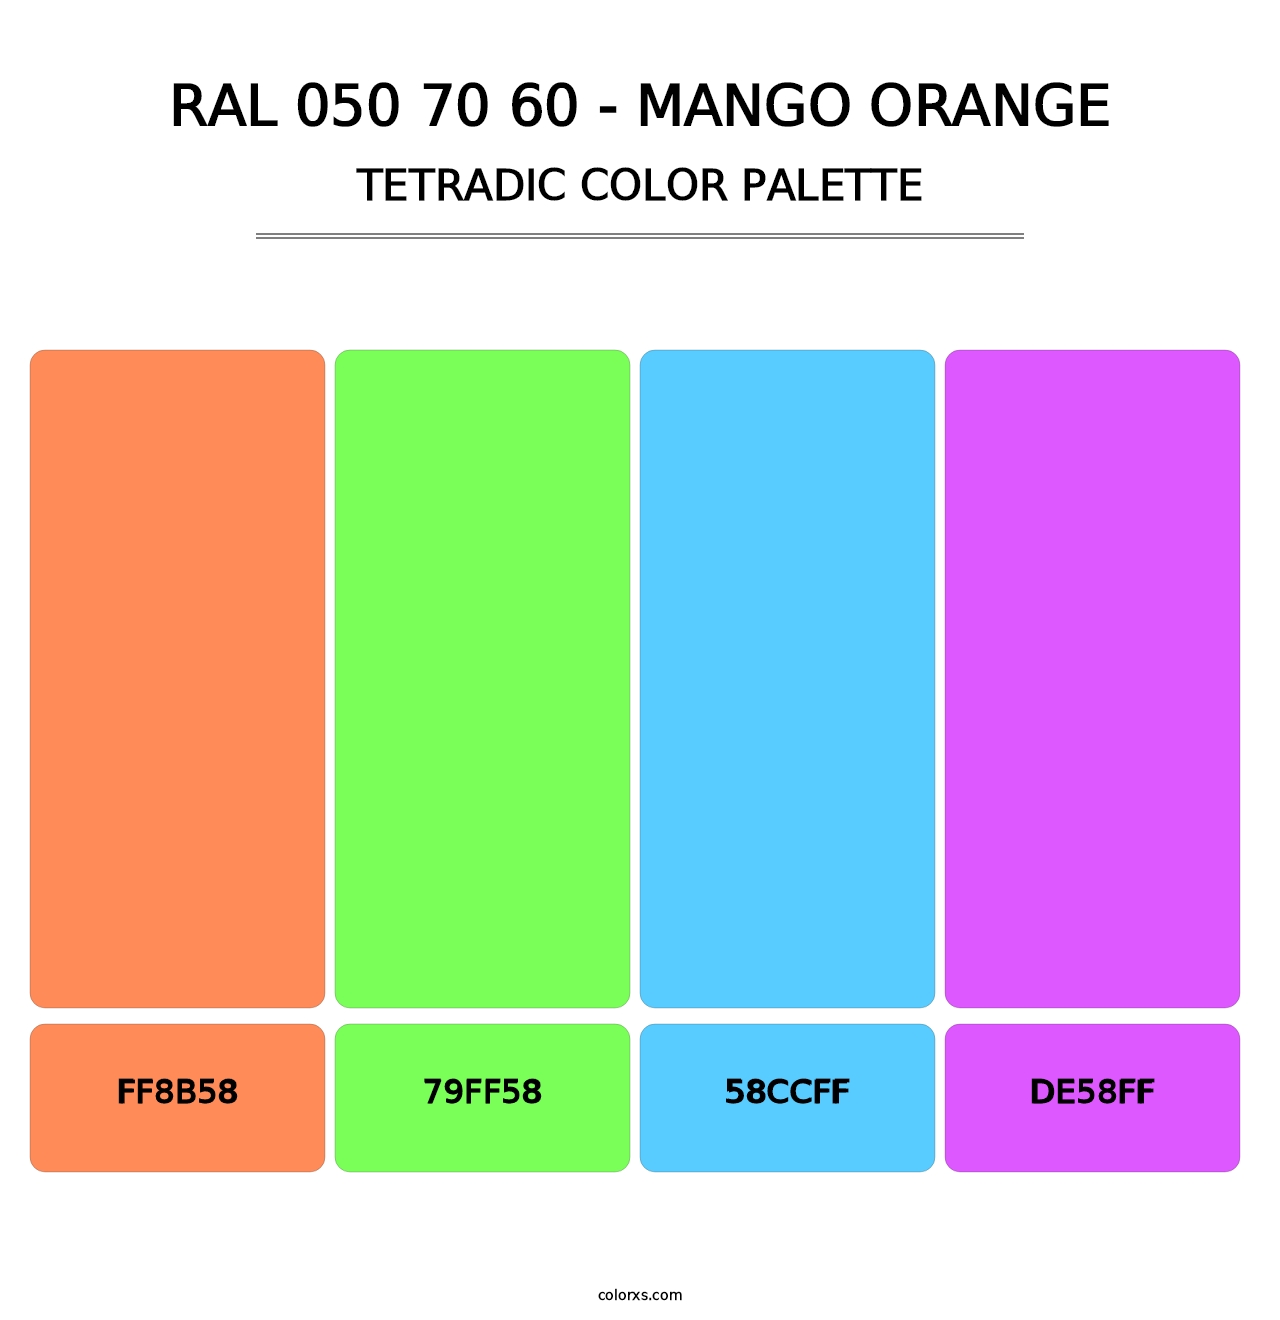 RAL 050 70 60 - Mango Orange - Tetradic Color Palette